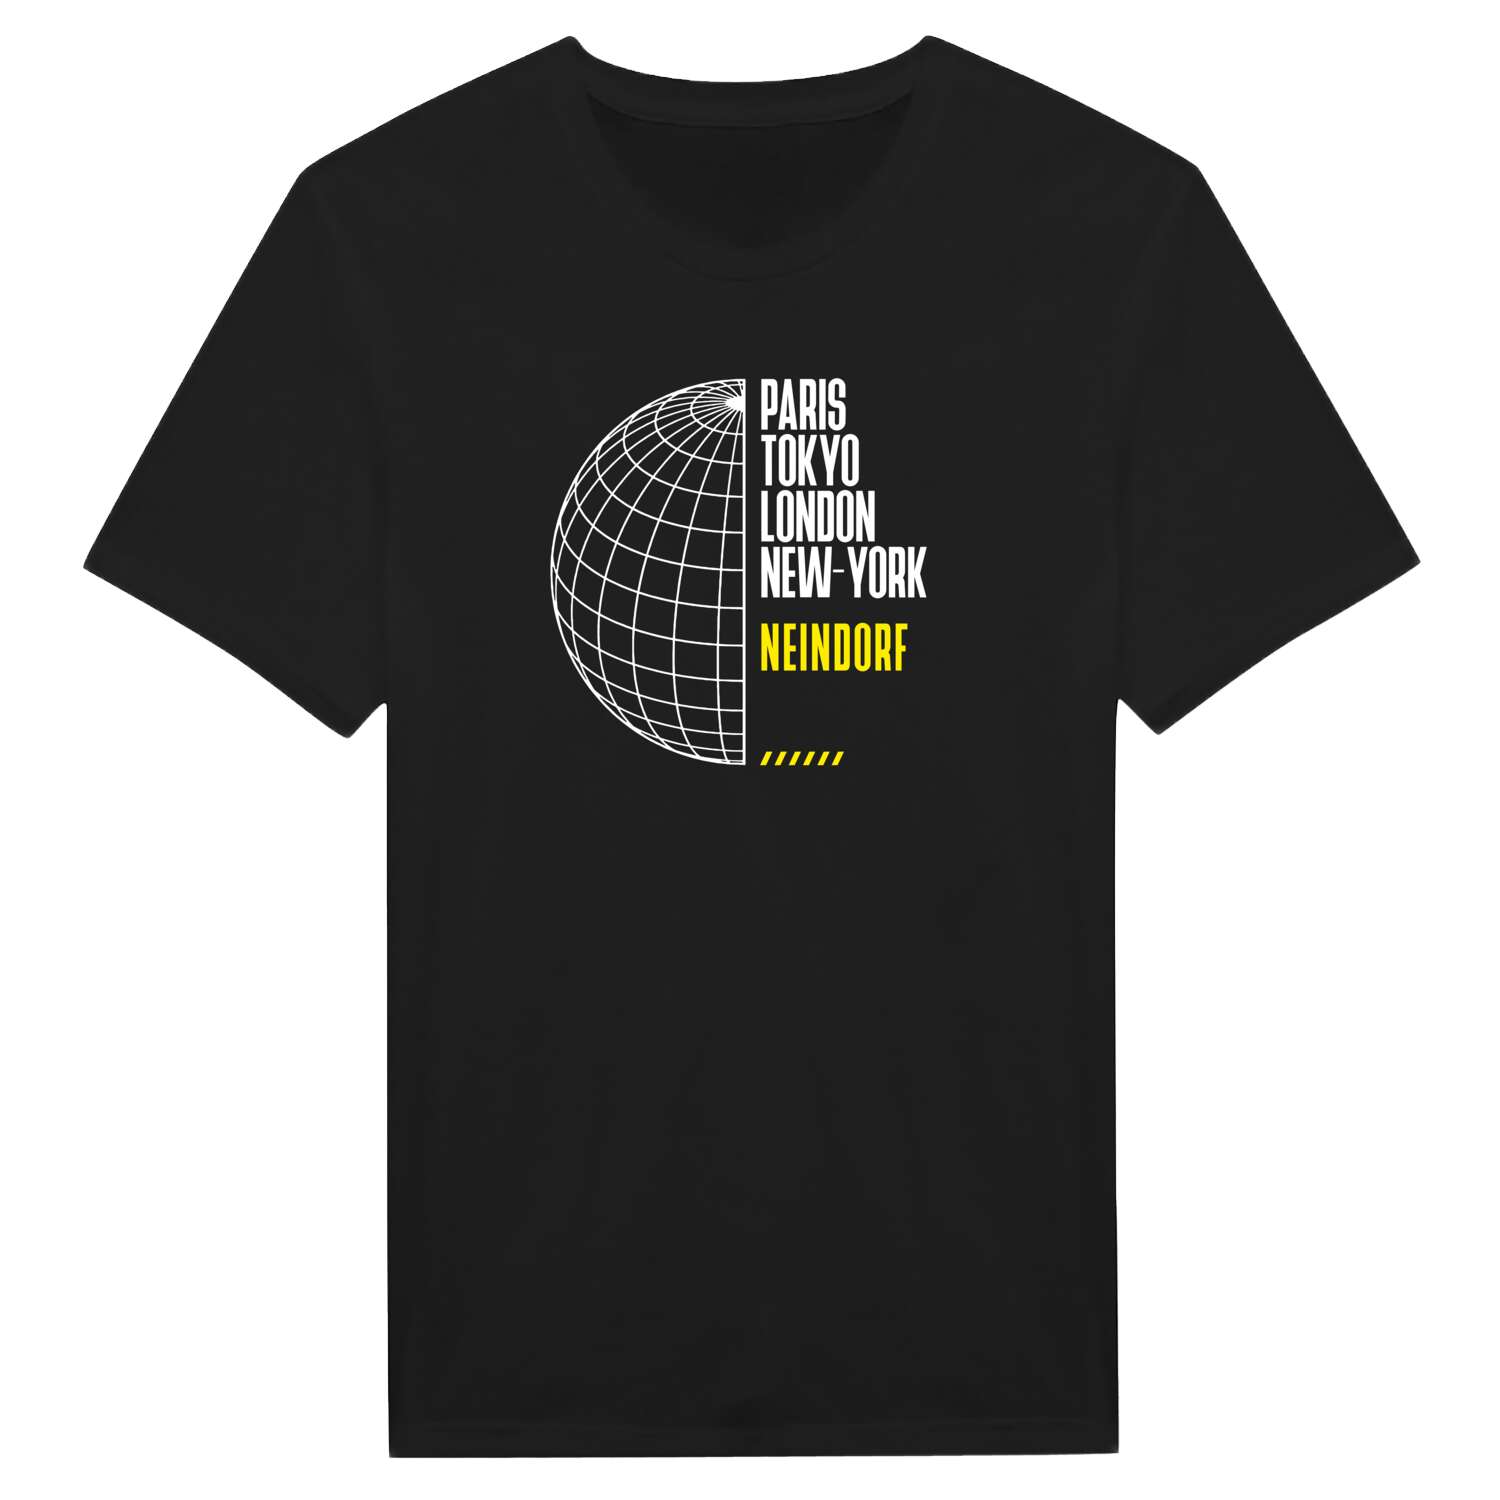 Neindorf T-Shirt »Paris Tokyo London«